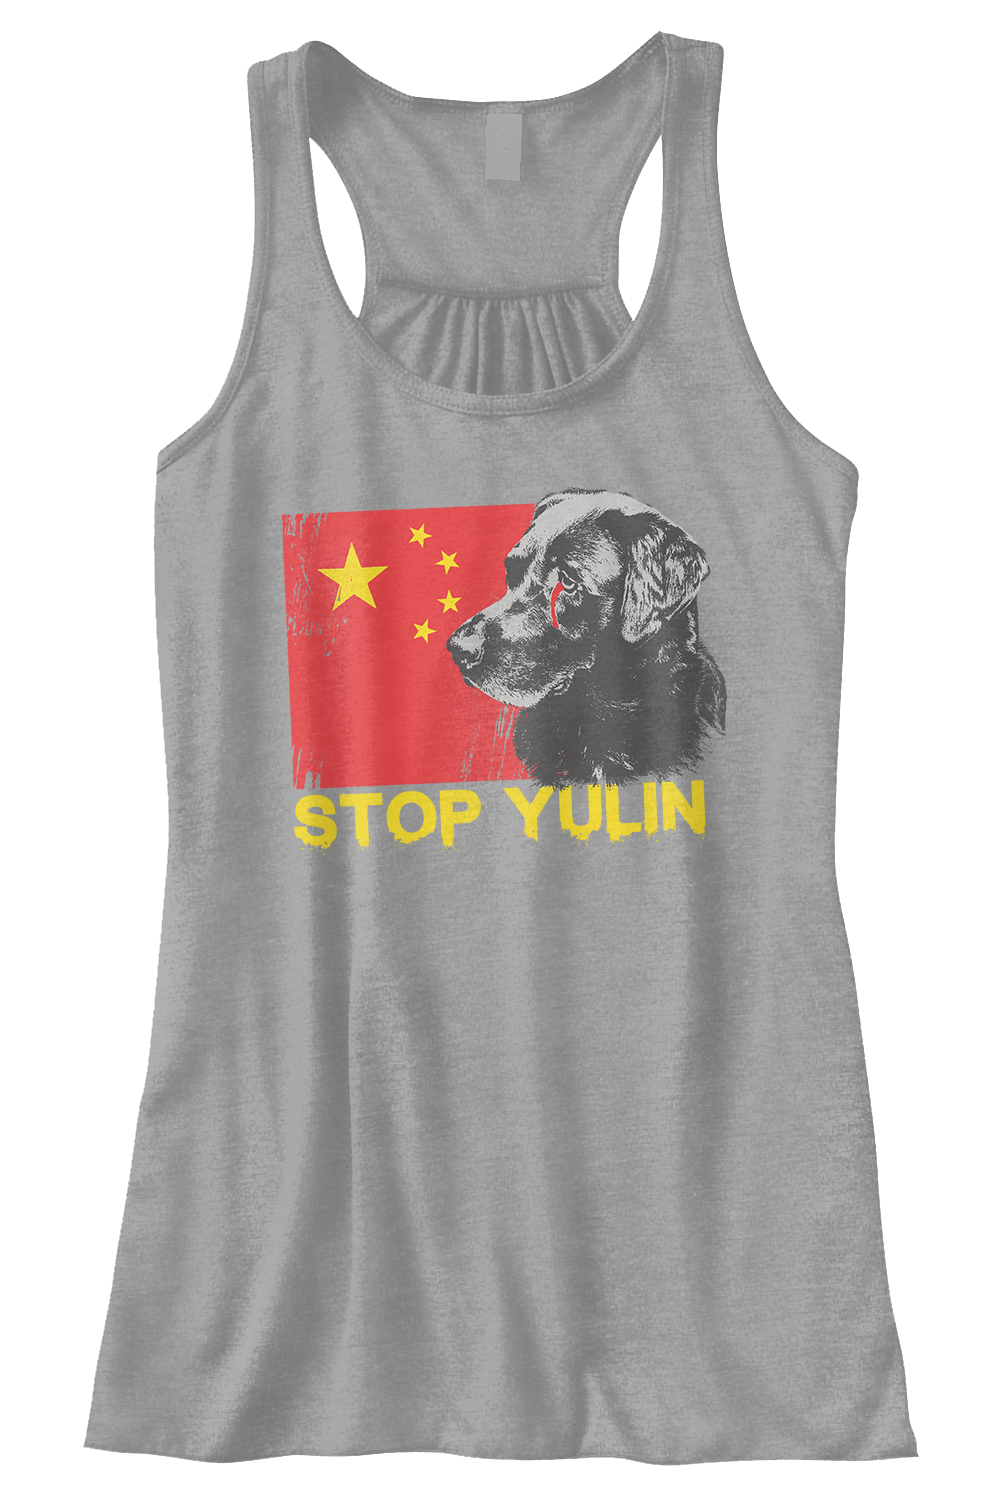 Stop Yulin Tear Bella Fashion Tank